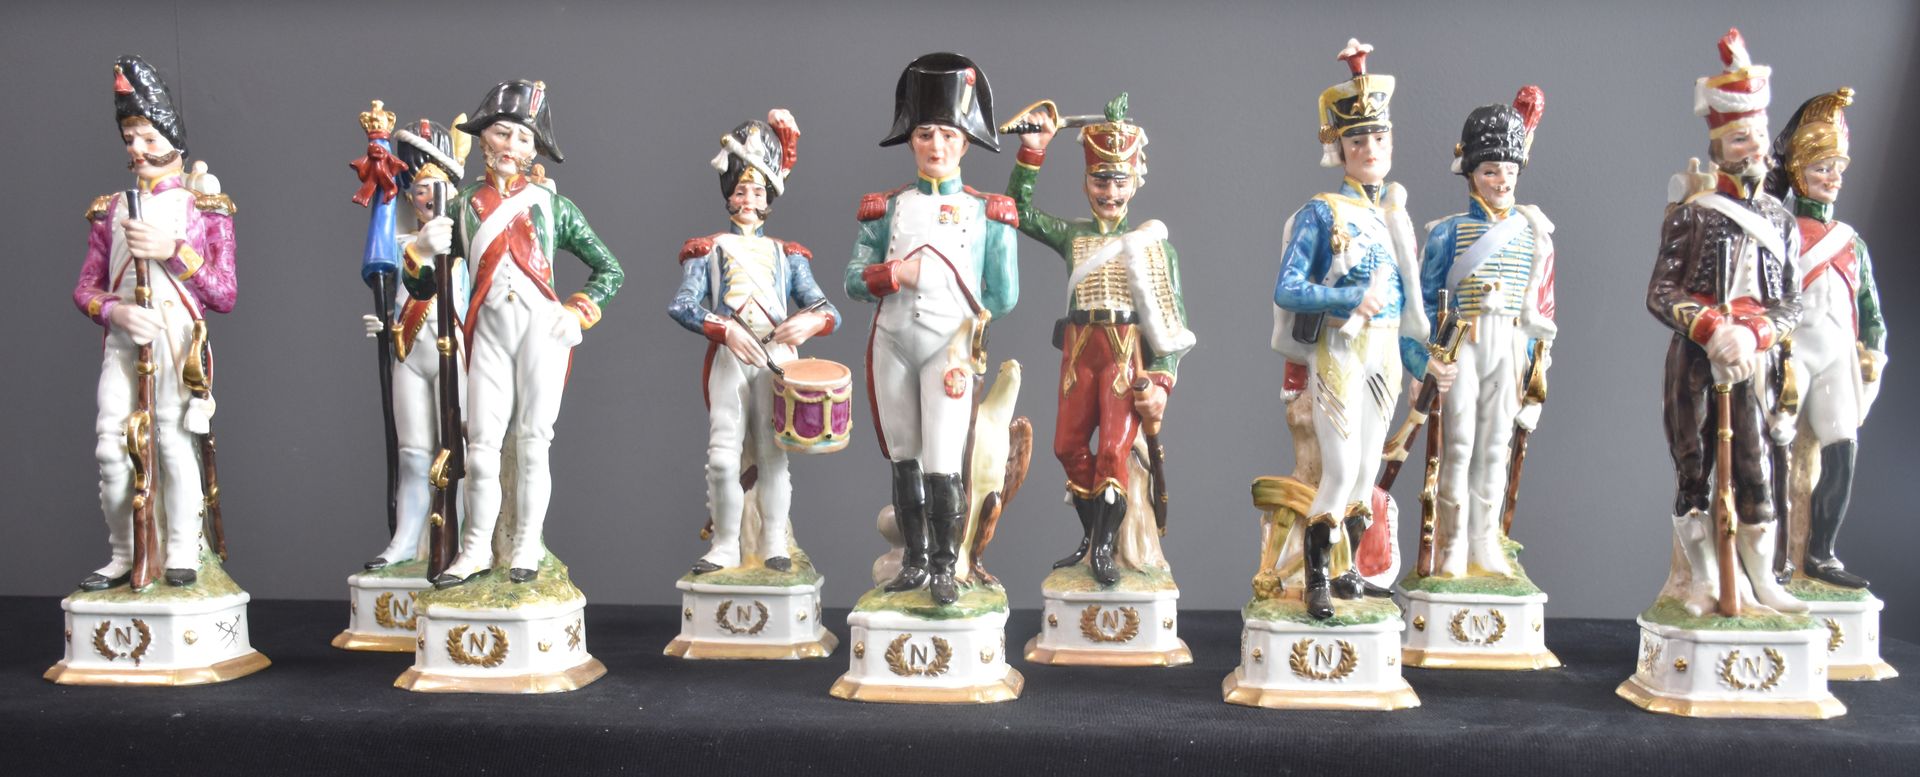 Null 代表拿破仑及其军官的瓷器士兵系列。二十世纪中期。高：30厘米 代表拿破仑及其军官的瓷器士兵系列。第二十期中。高度：30厘米